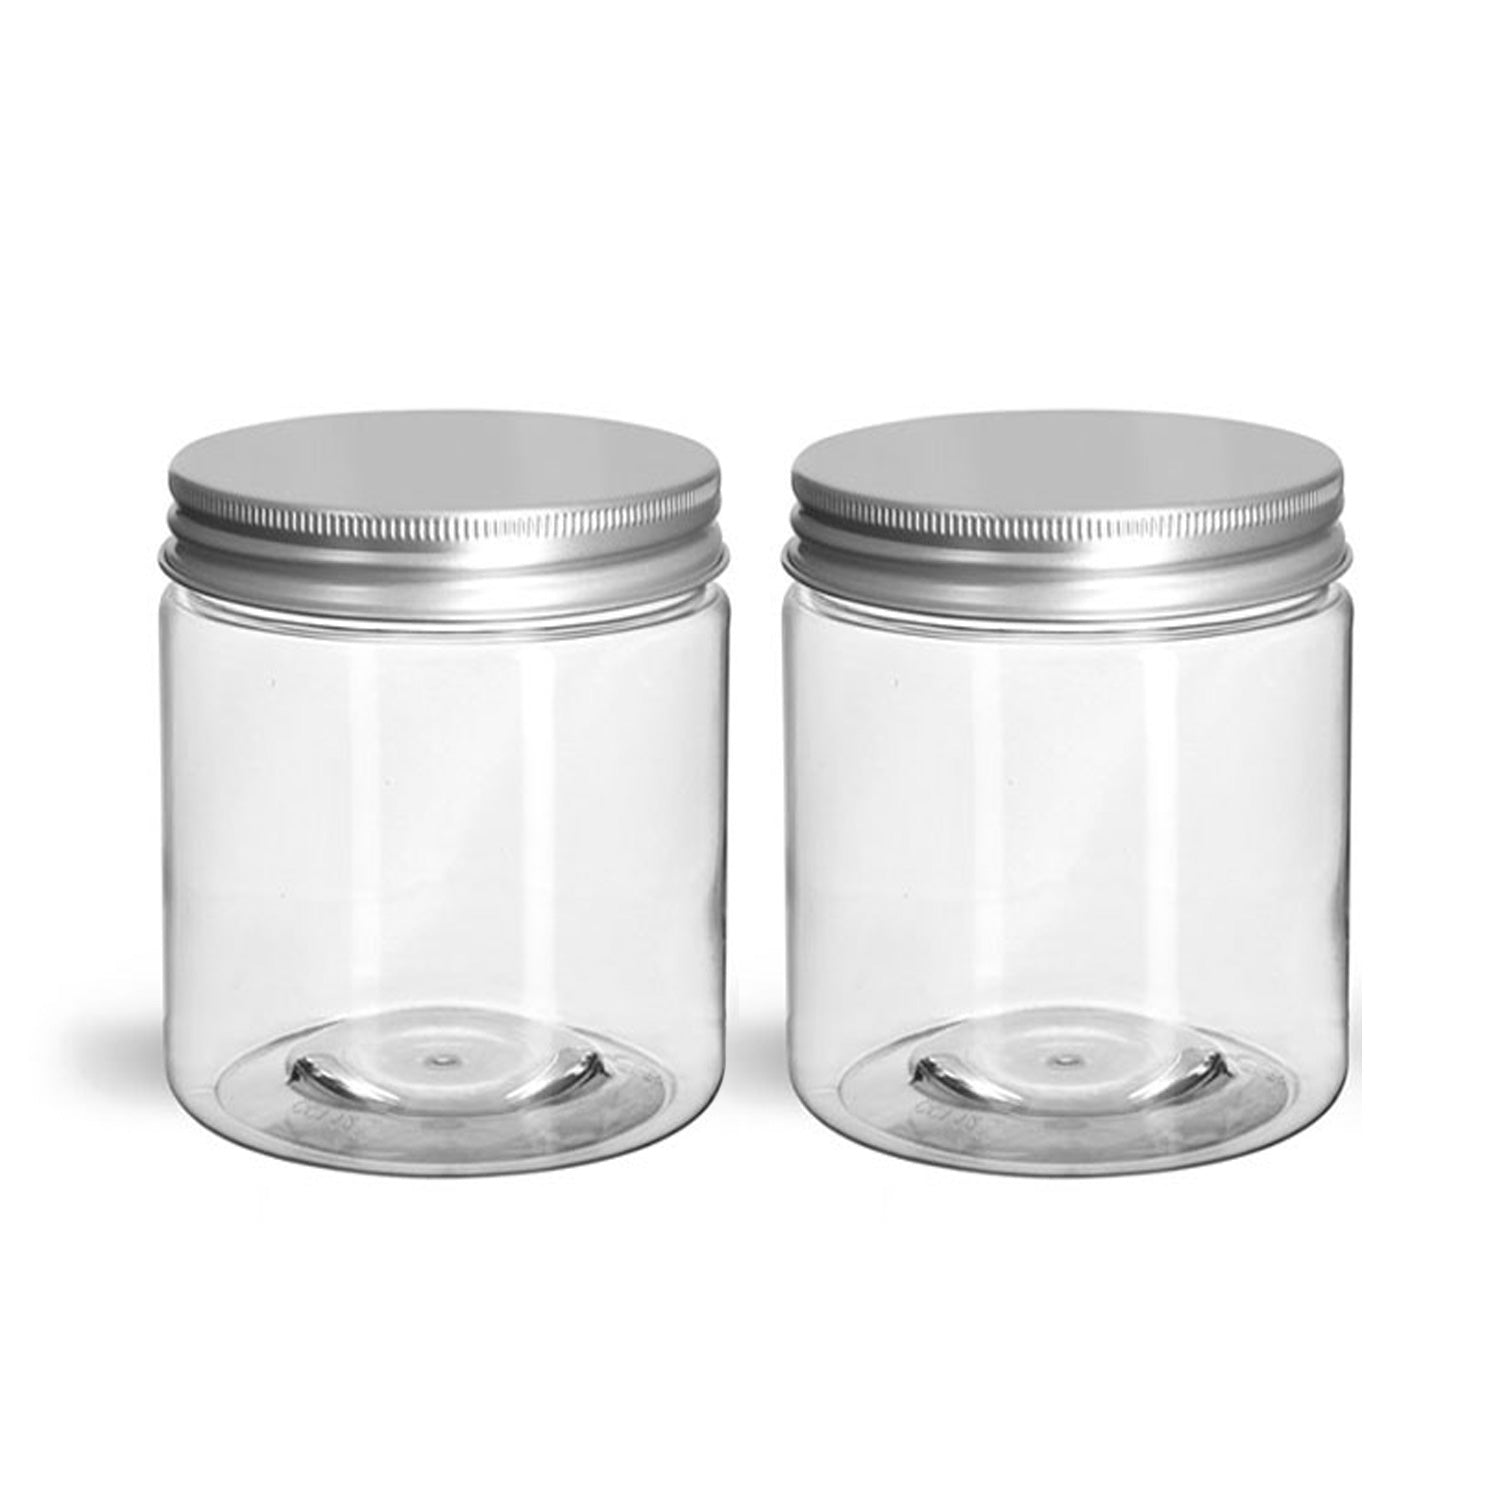 Transparent Candle Jar - Buy 1 Get 1 Free